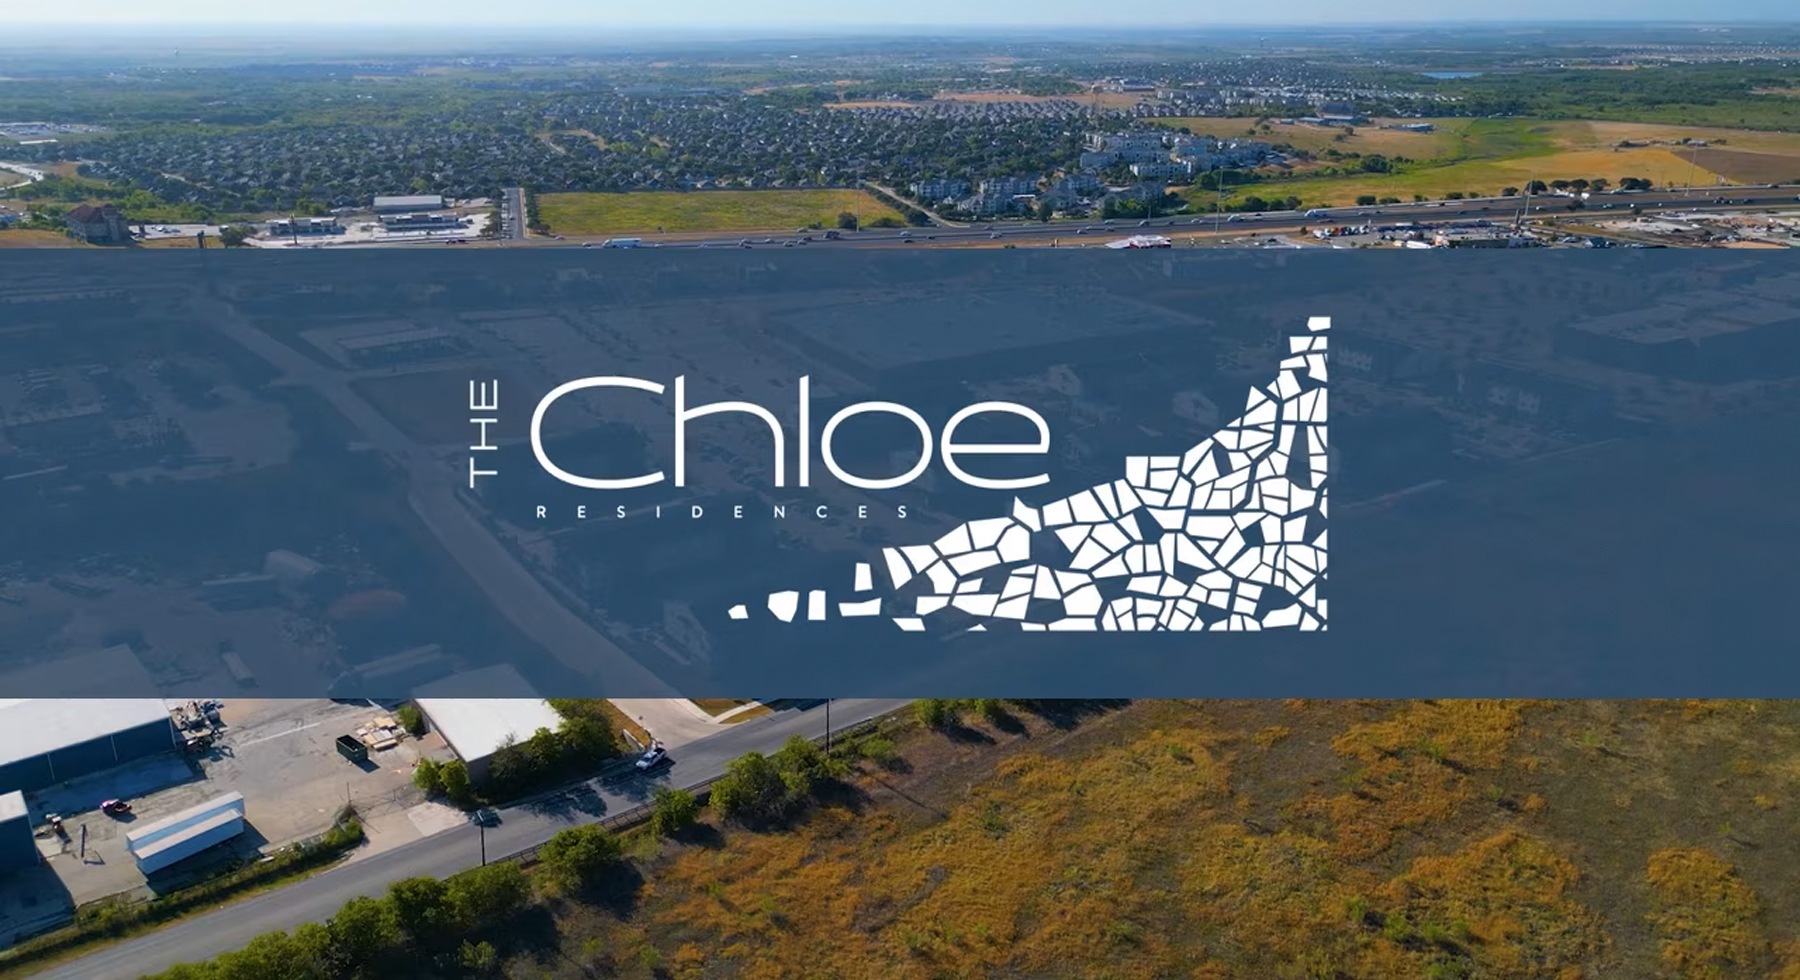 The Chloe Video